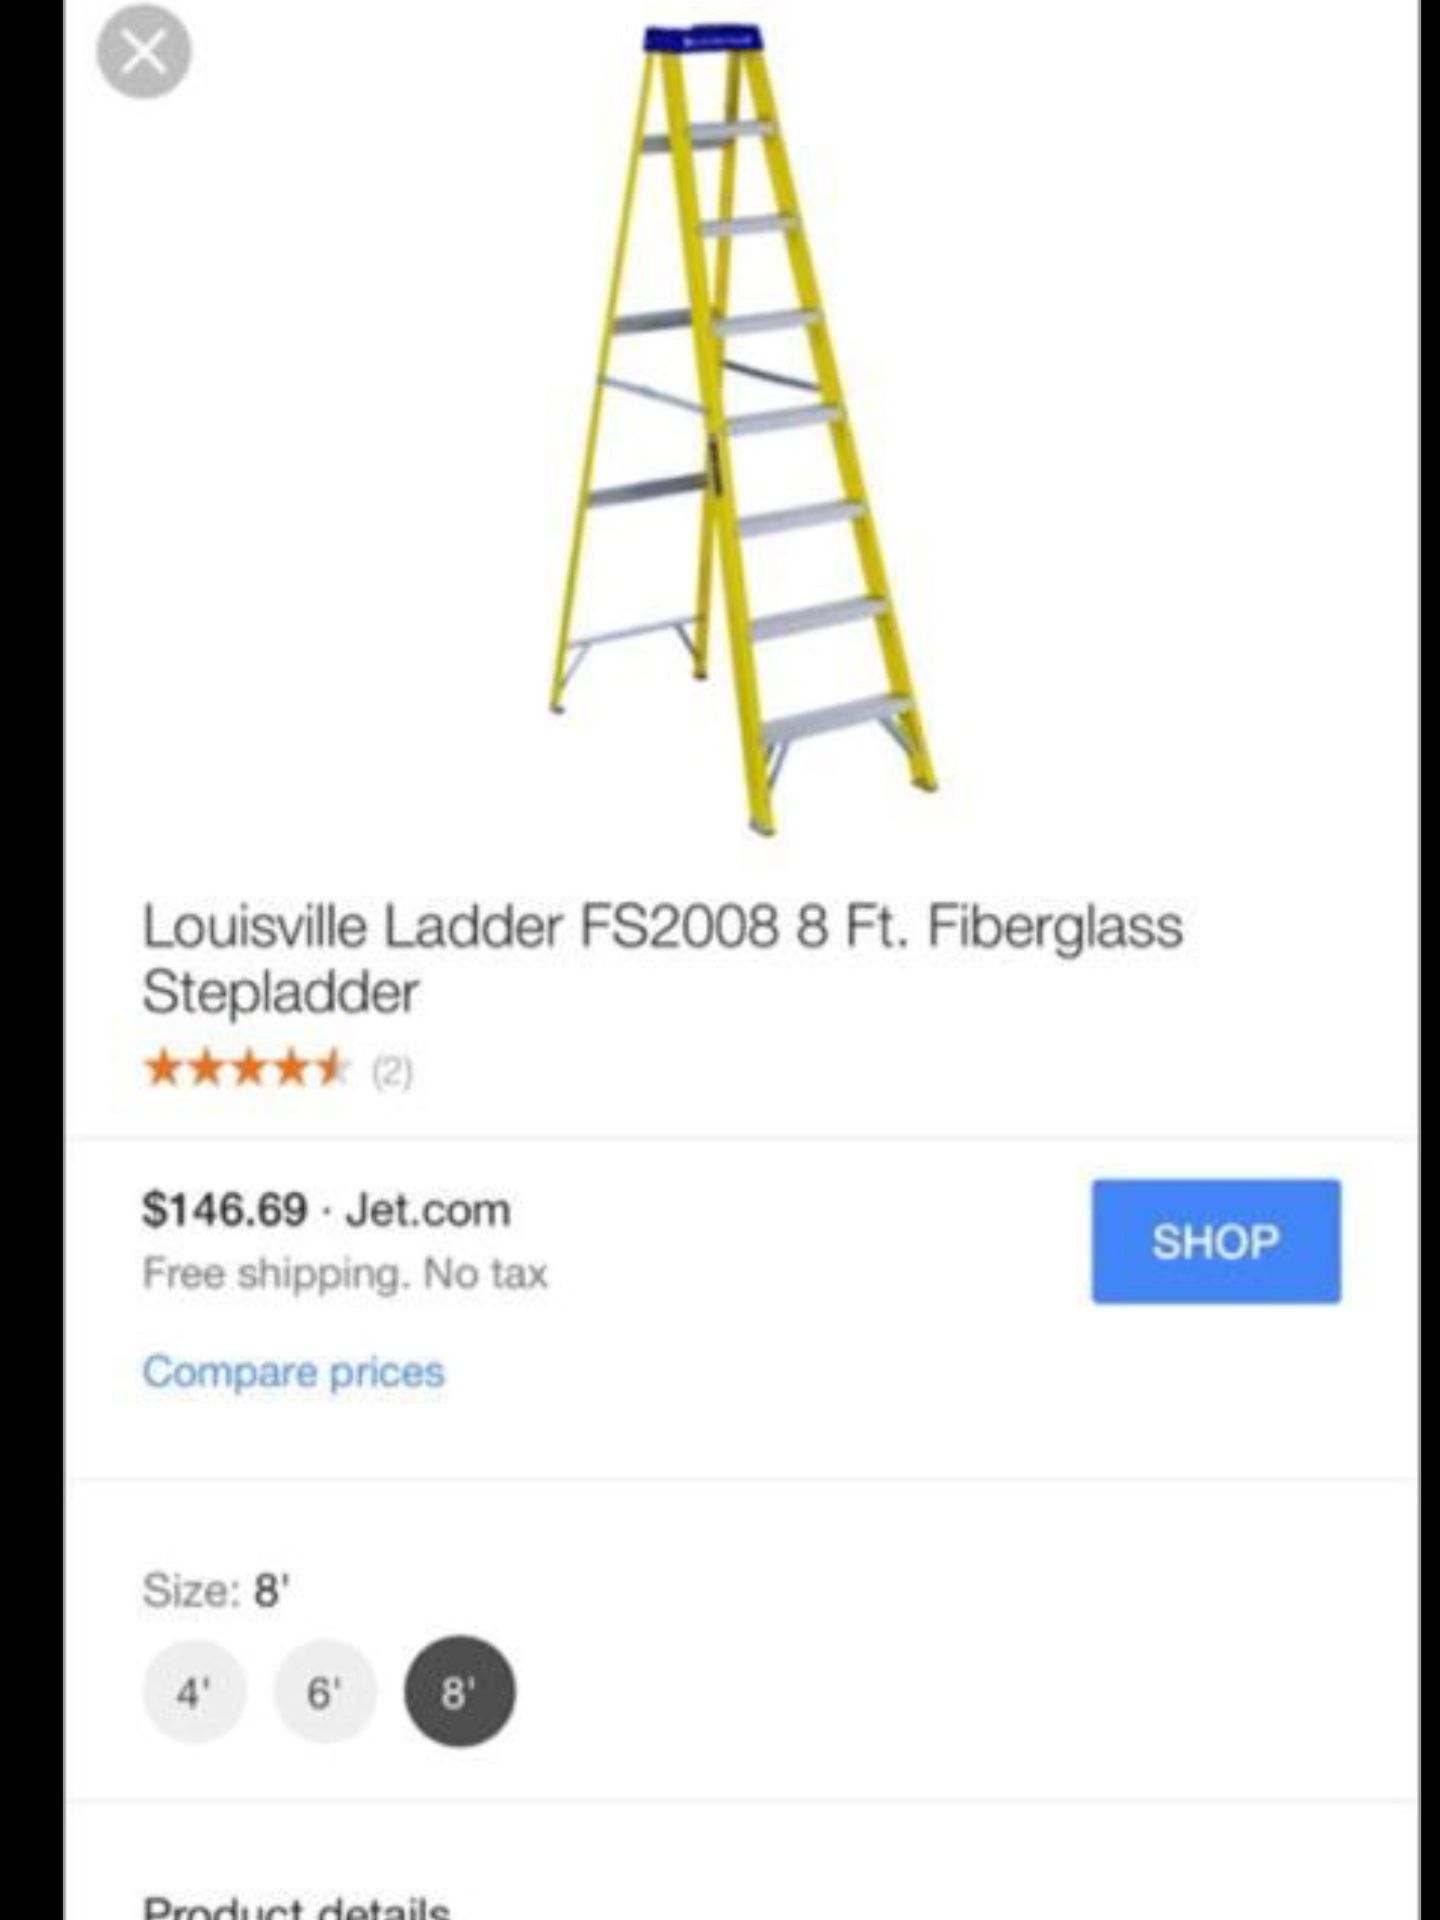 1 Louisville ladders 8 ft Fiberglas